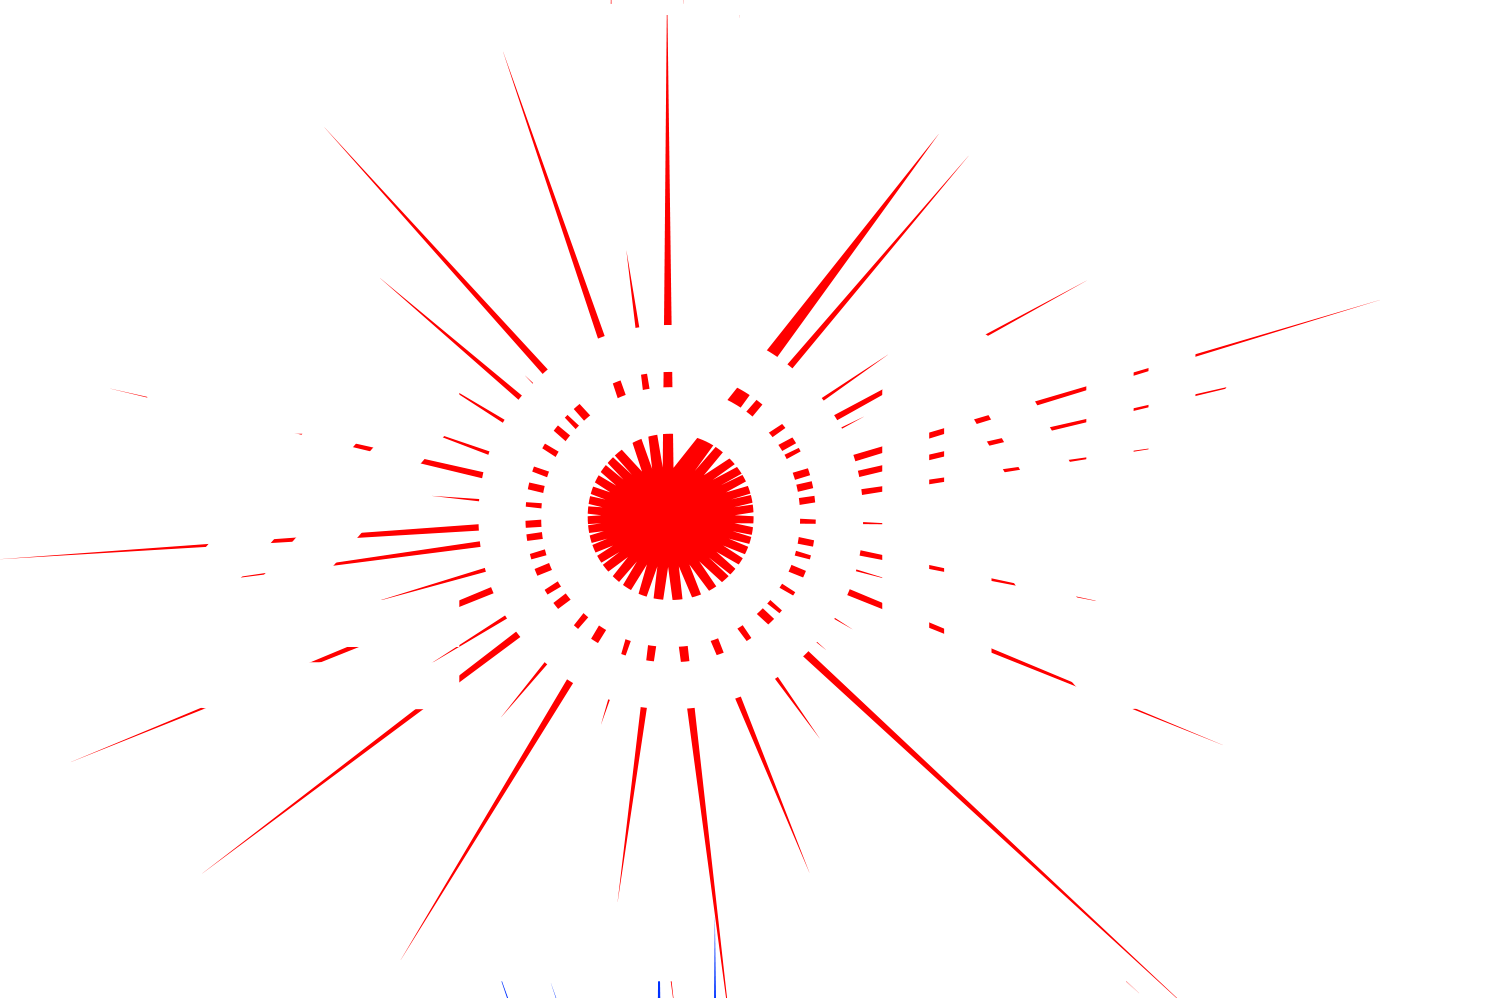 The club zone